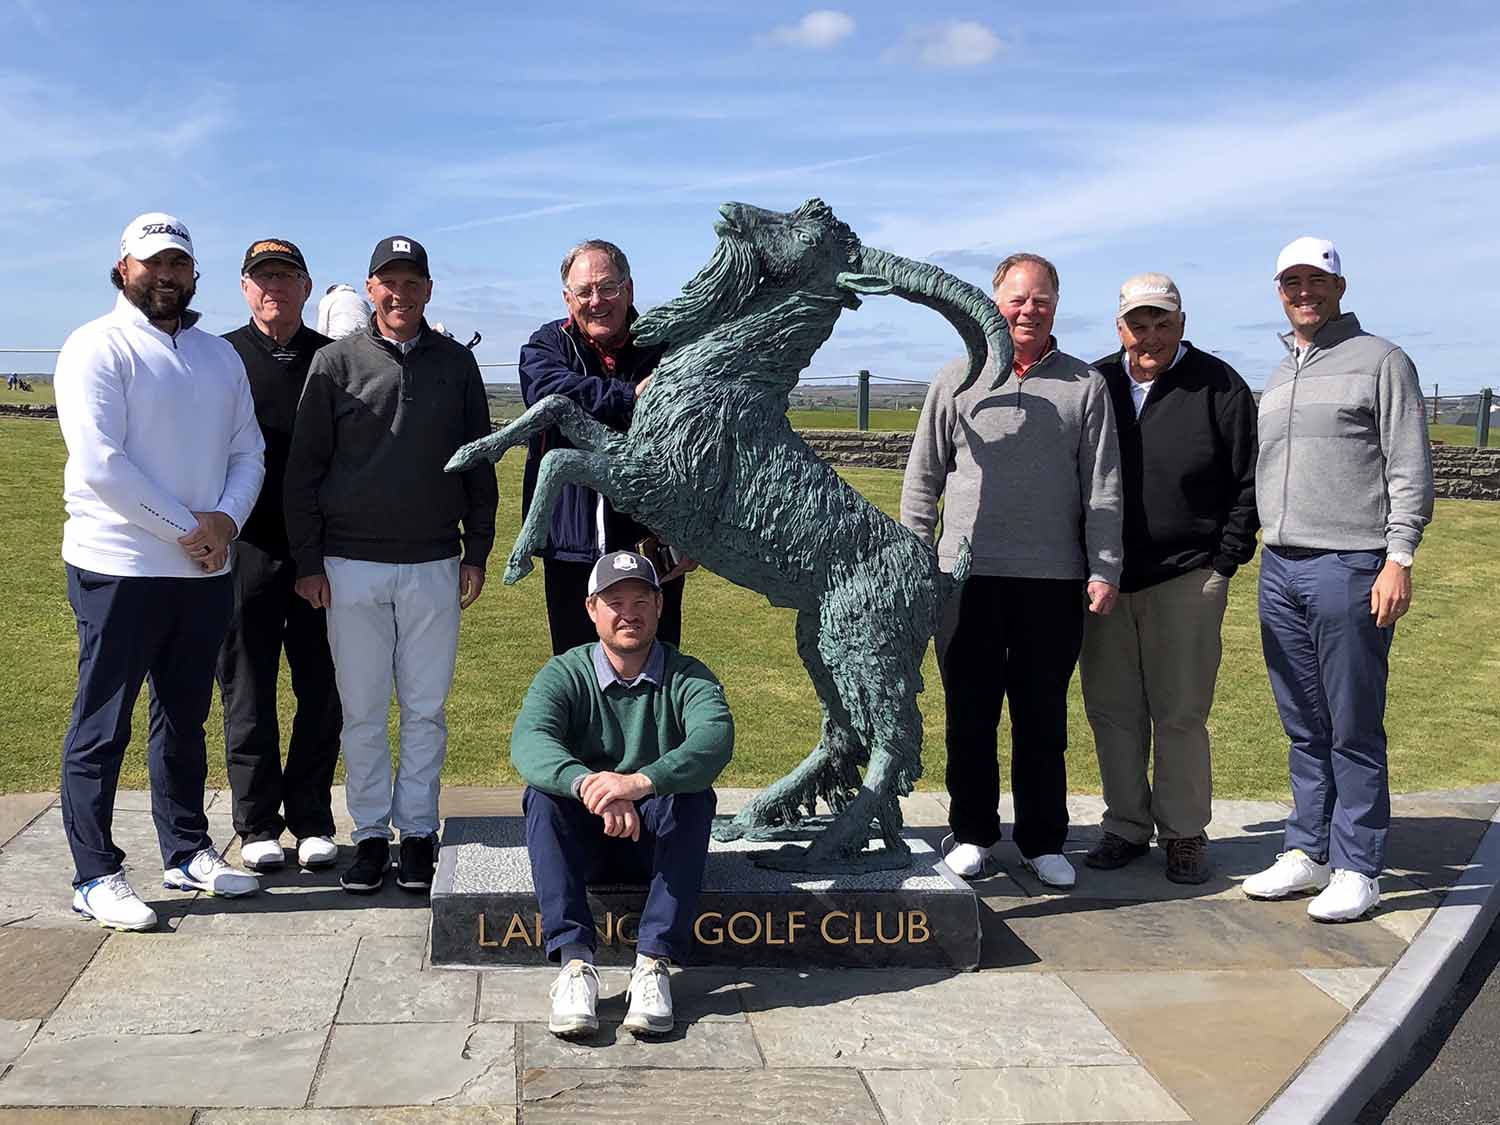 Haversham & Baker Ireland golf trip reviews